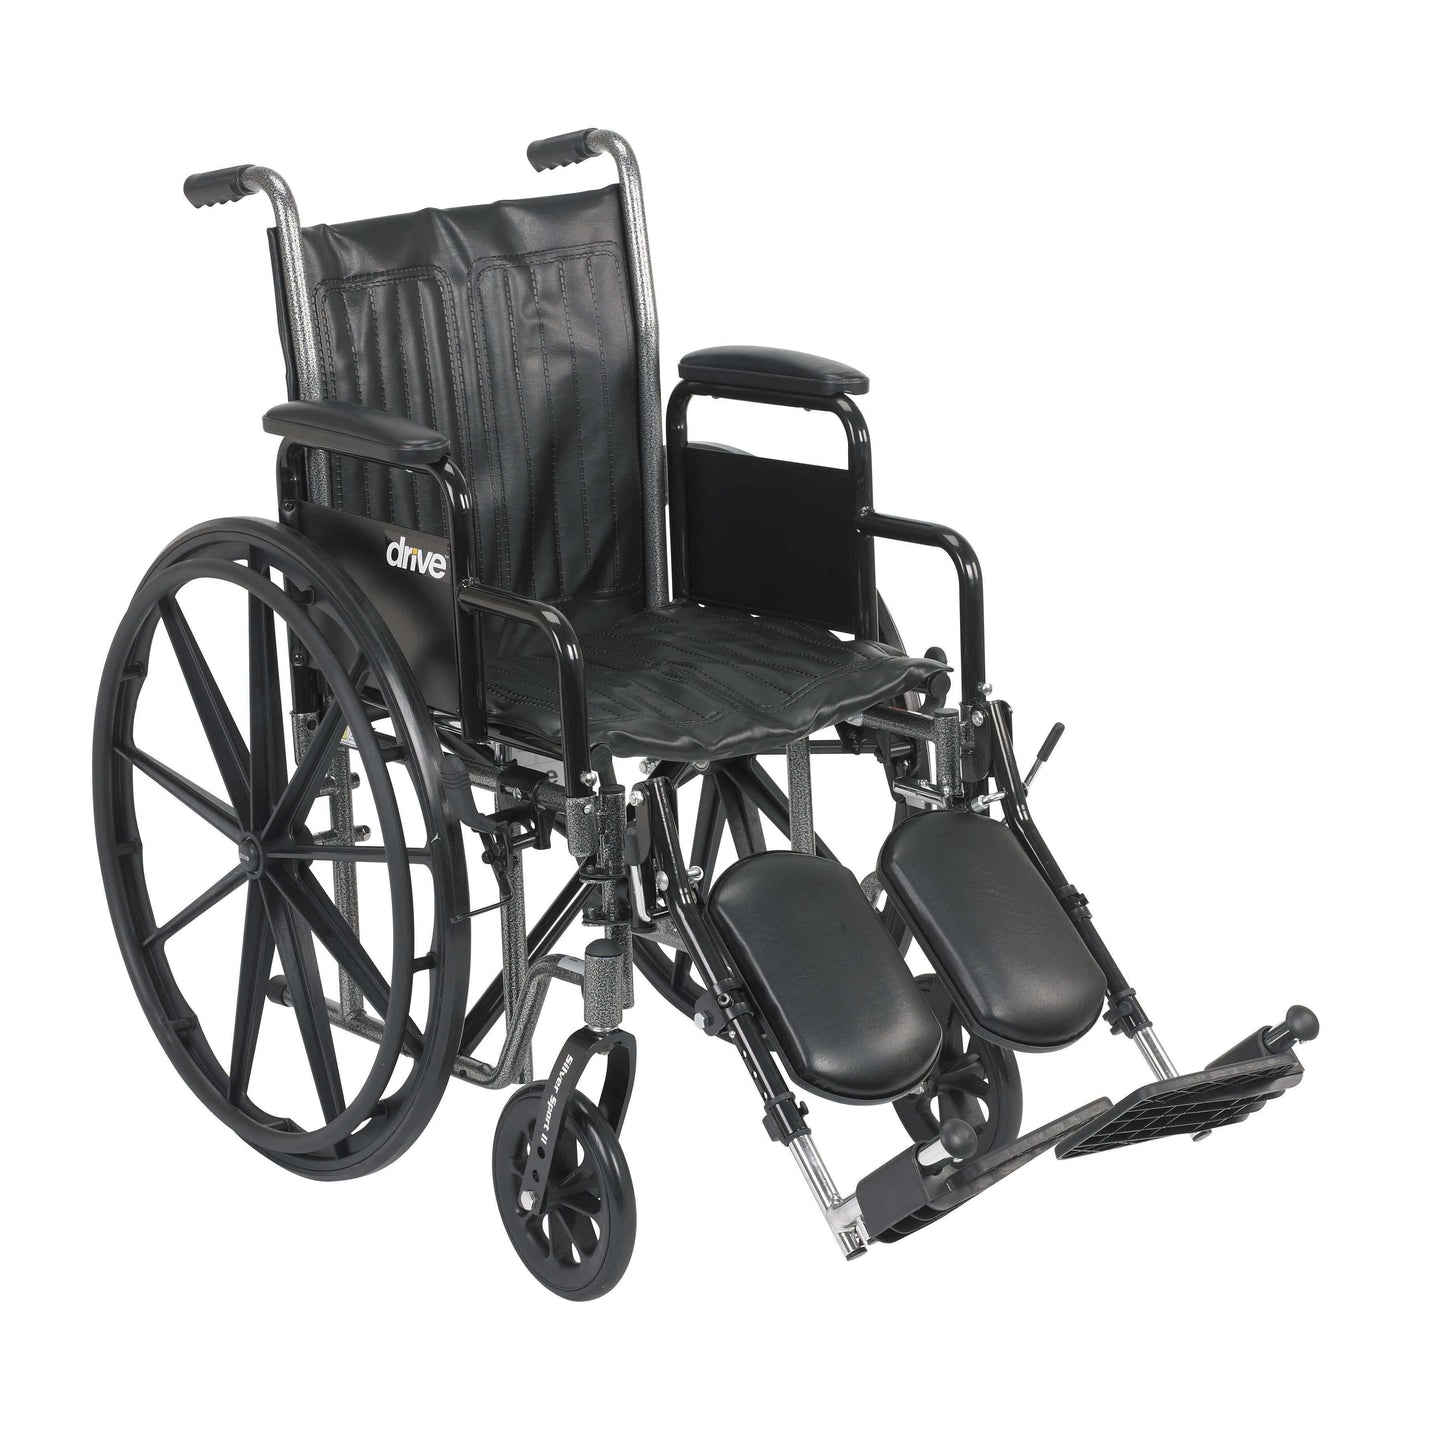 Drive ssp218dda-elr Silver Sport 2 Wheelchair, Detachable Desk Arms, Elevating Leg Rests, 18" Seat